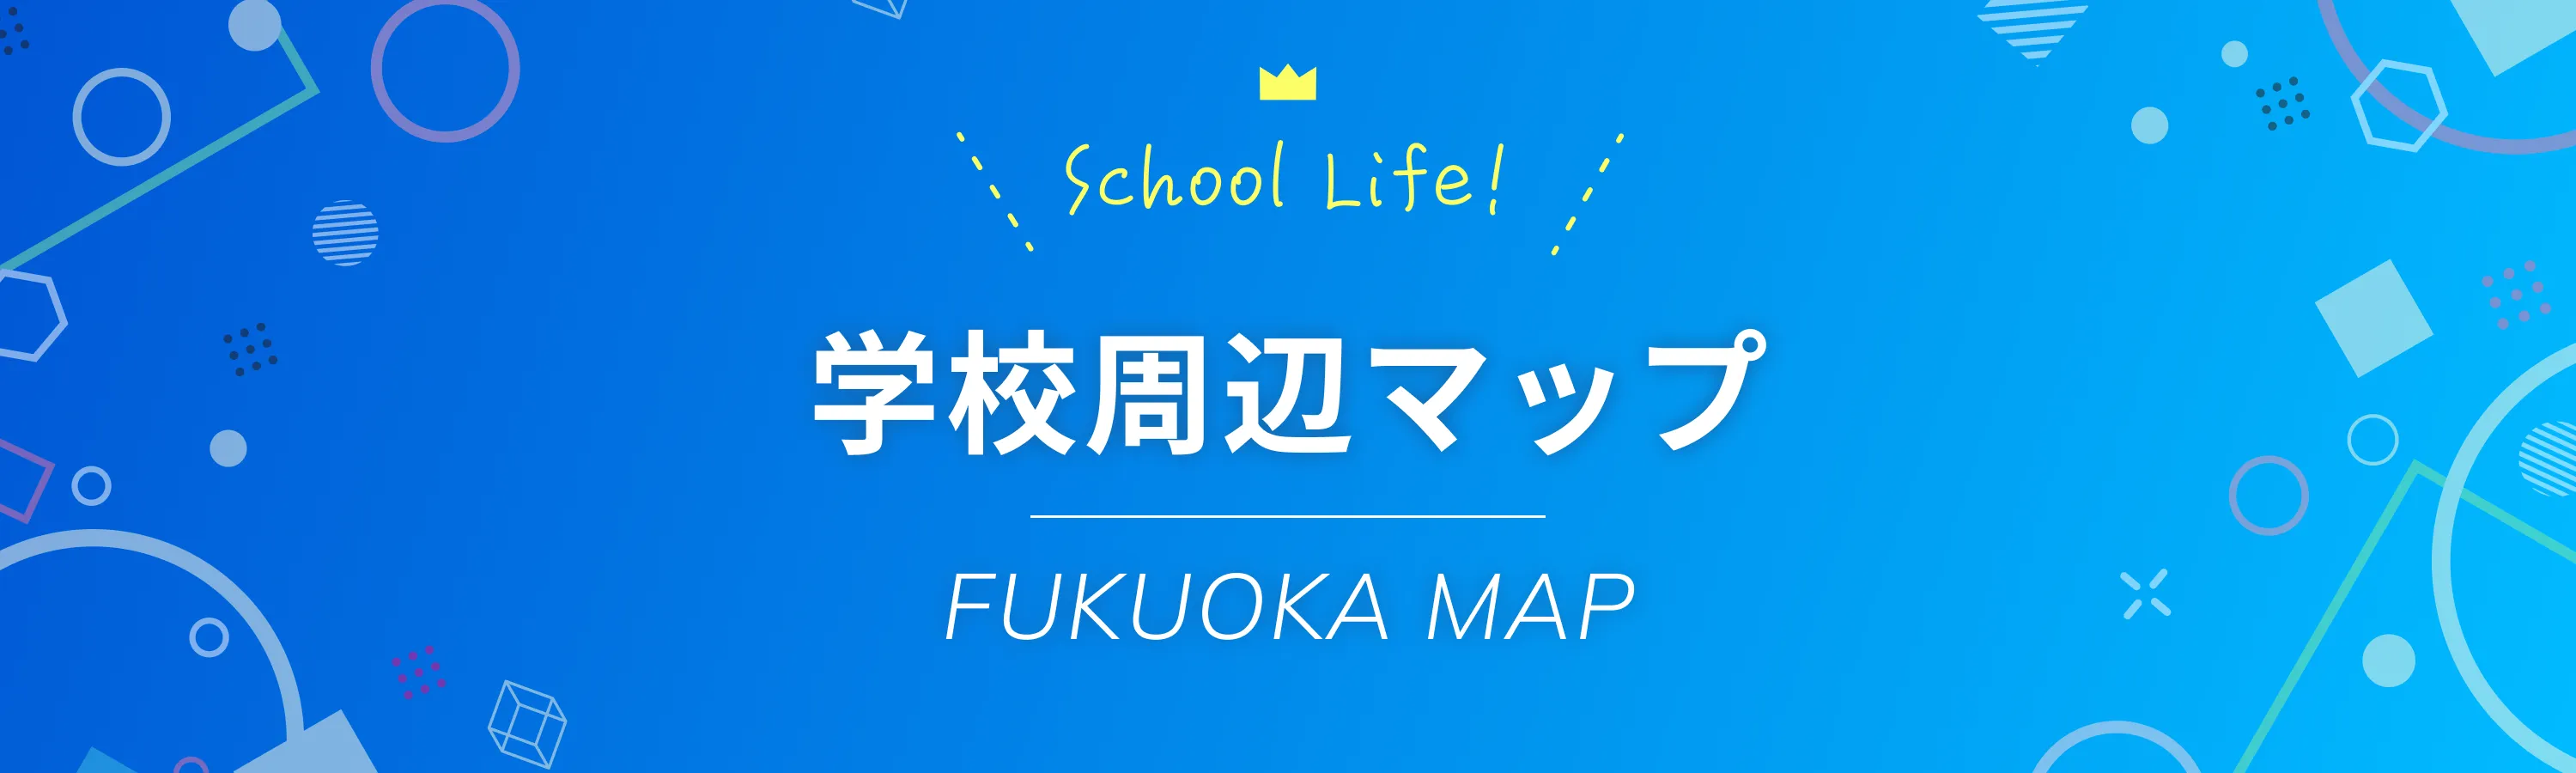 School life 学校周辺マップ